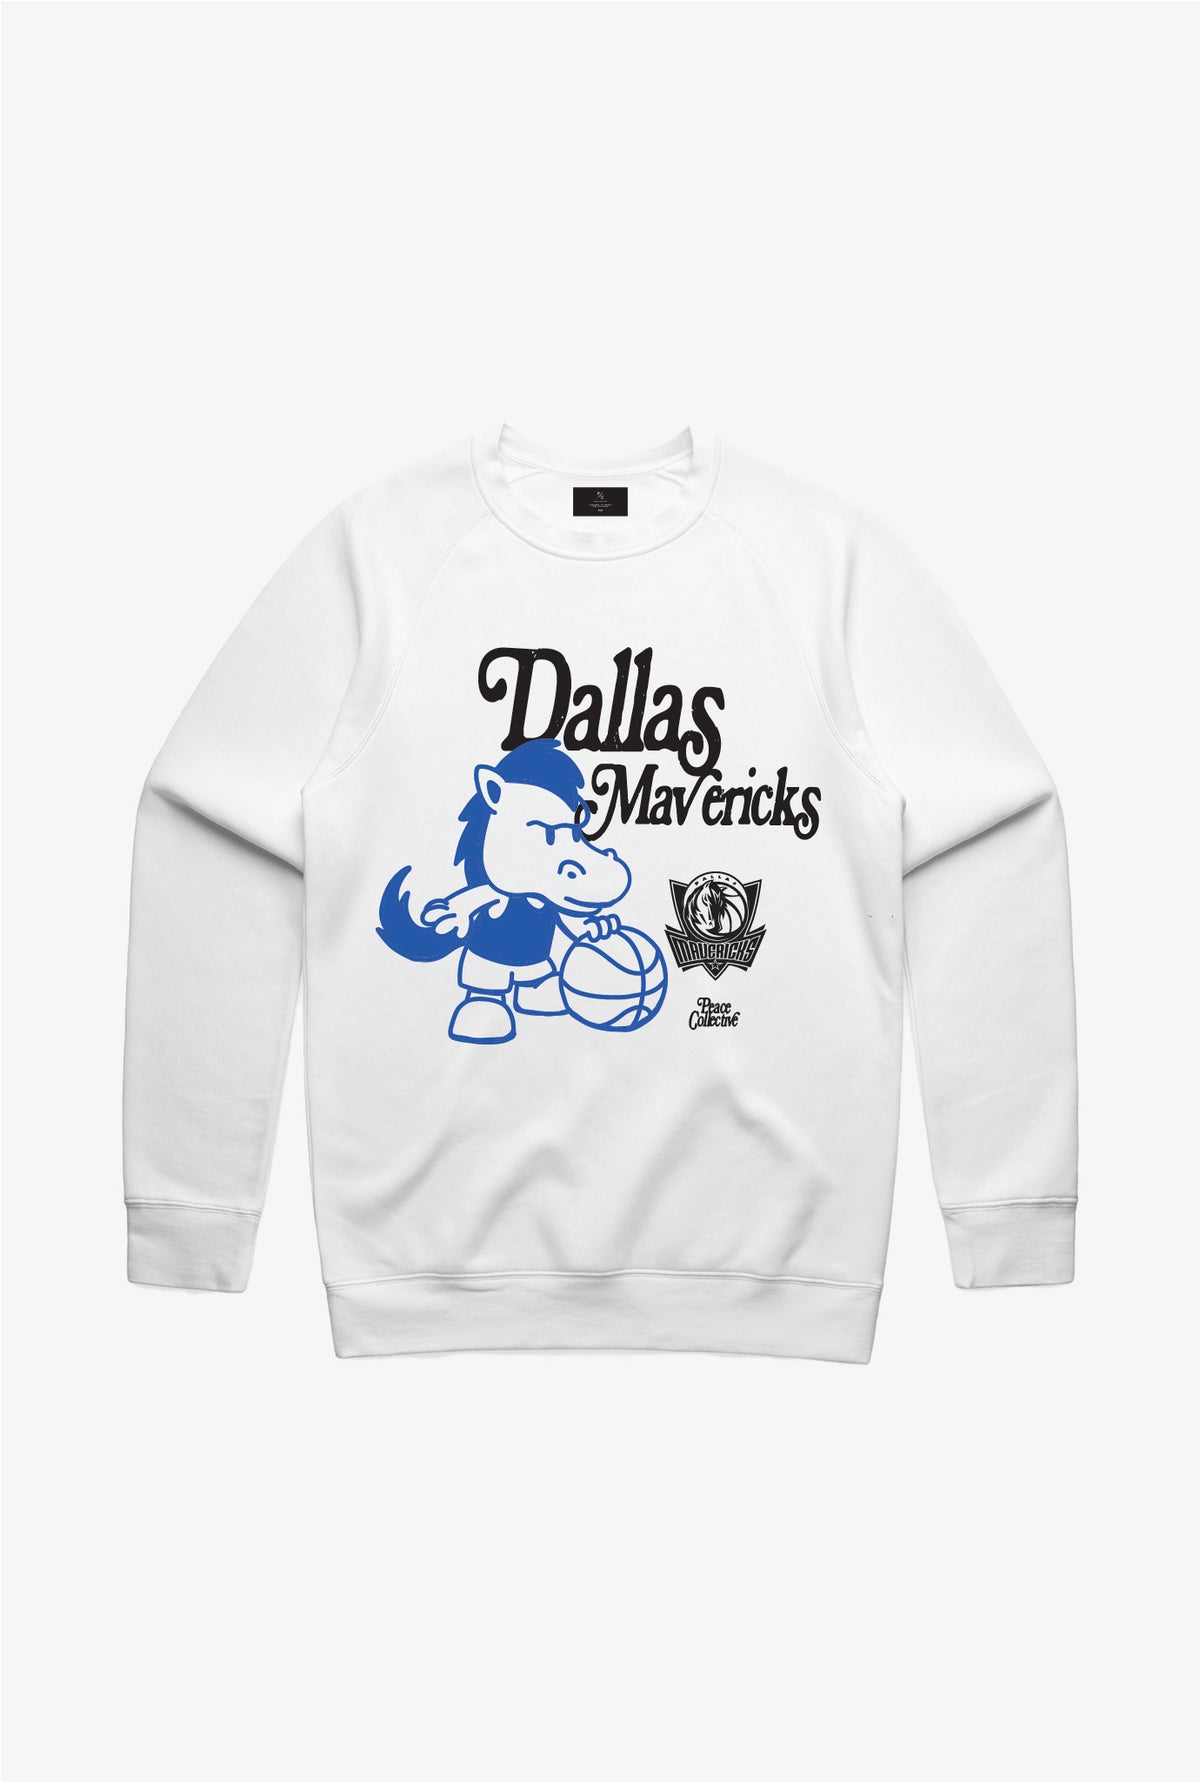 Dallas Mavericks Mascot Crewneck - White